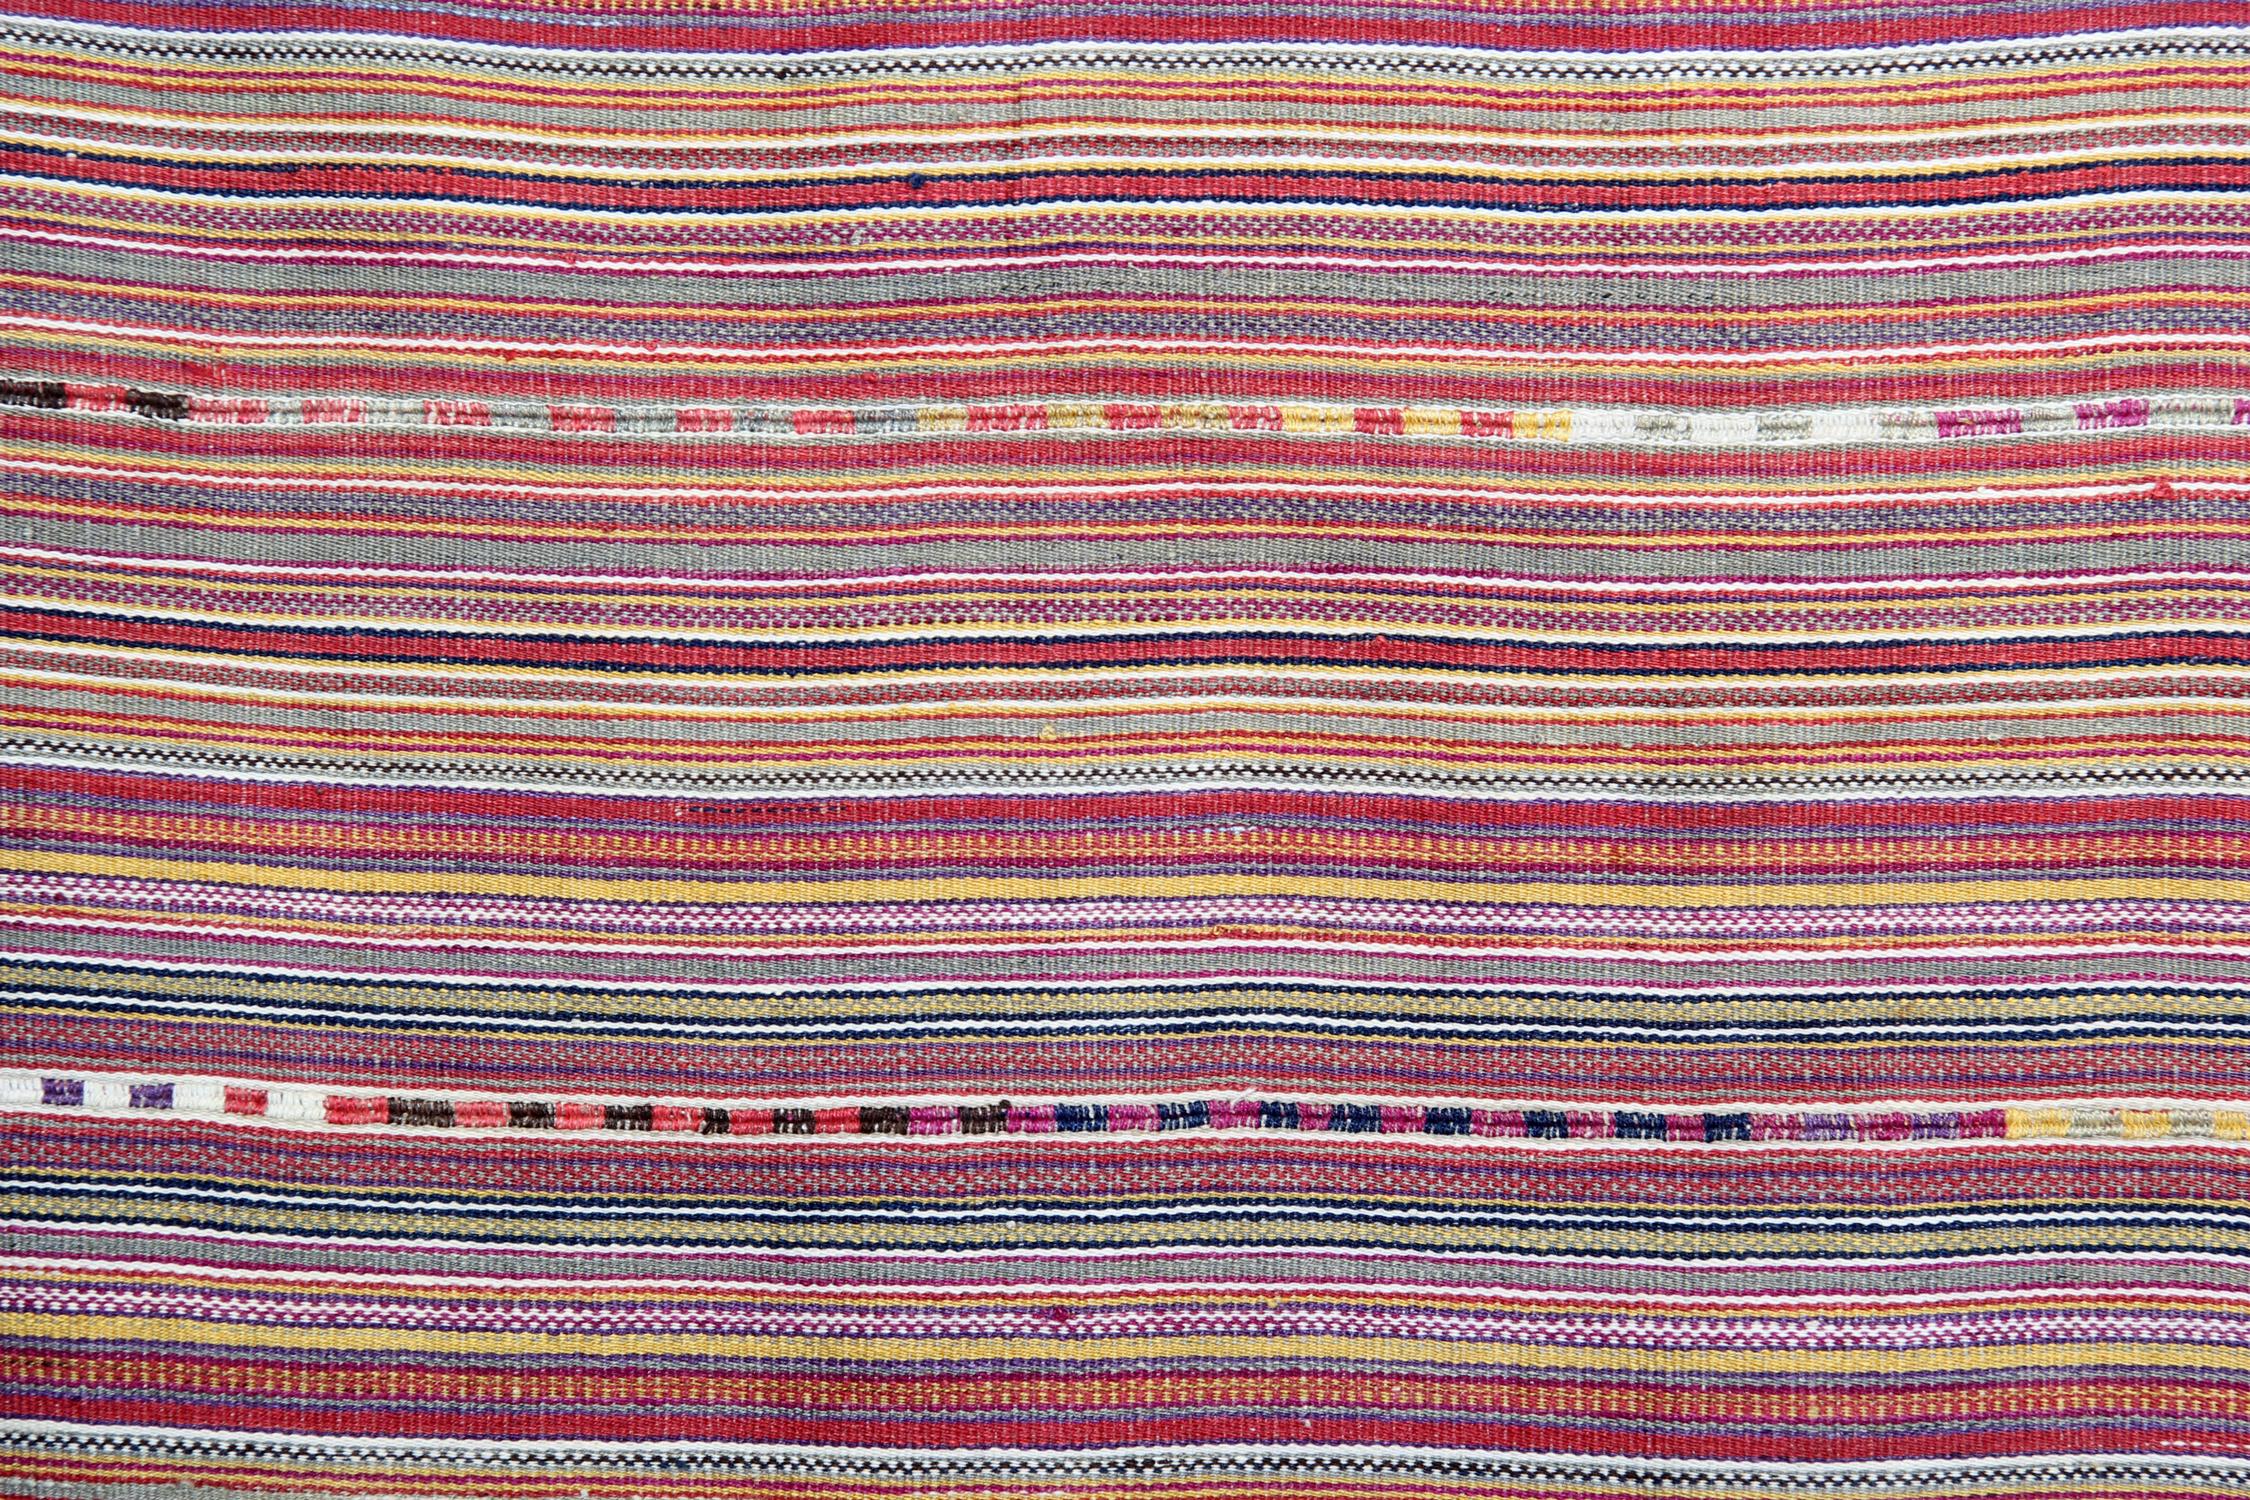 Azerbaijani Handmade Kilim Rugs, Antique Wool Jajim, Striped Red Cream Wool Textile For Sale